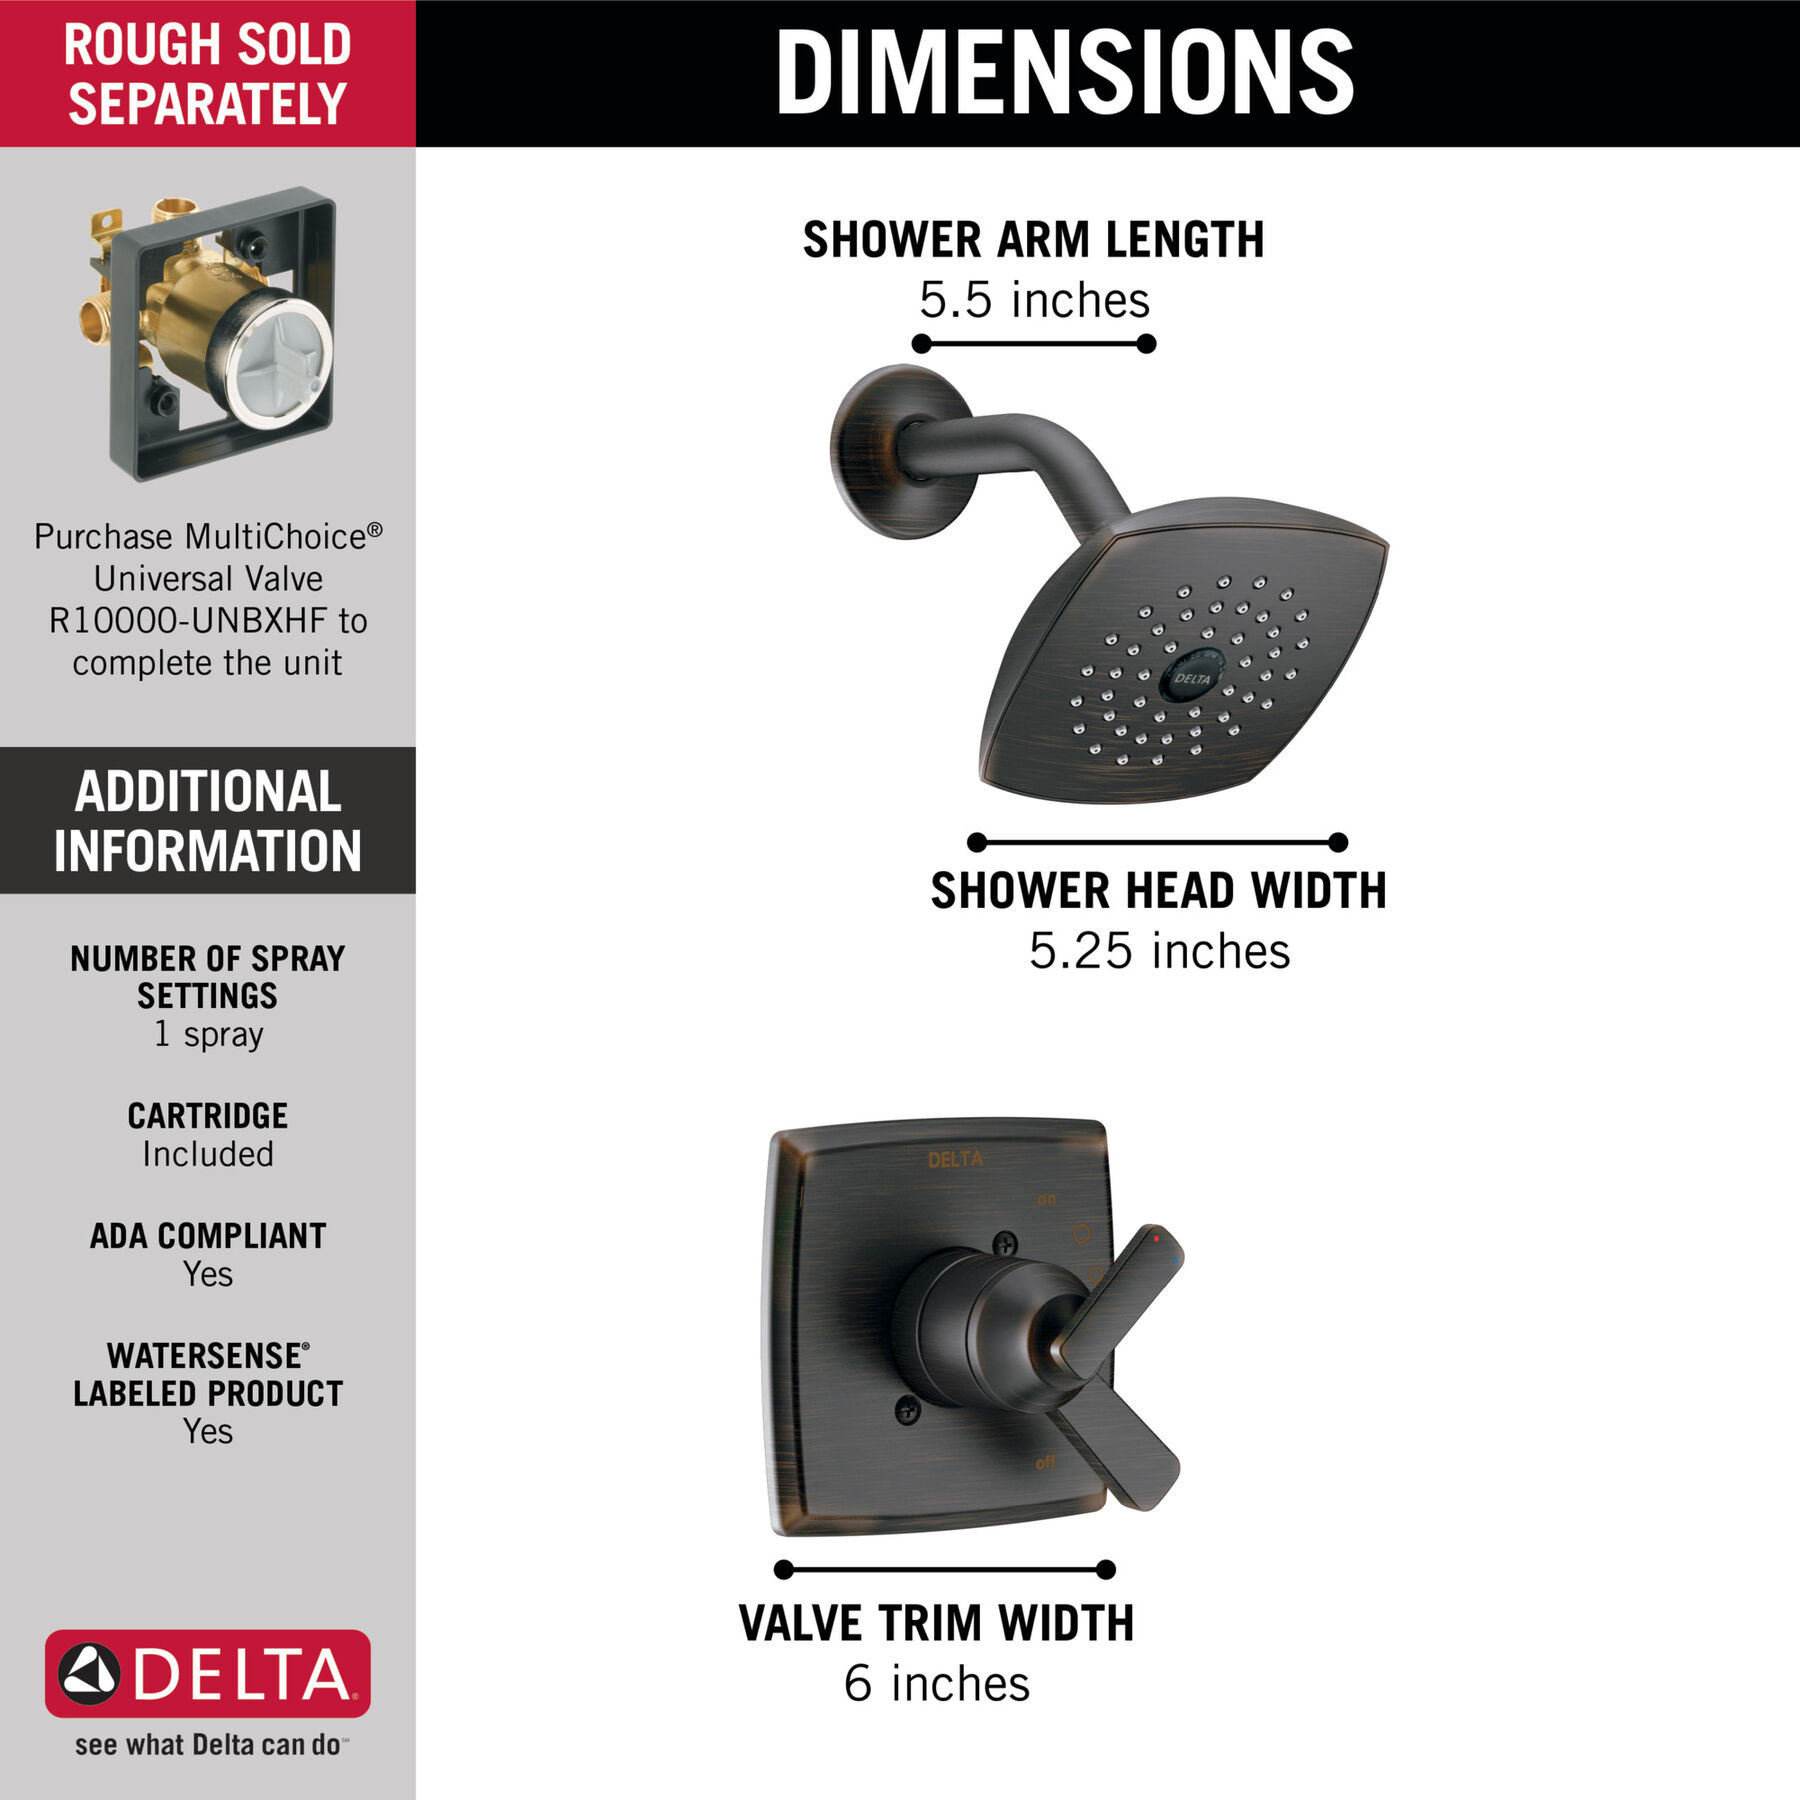 Delta Ashlyn Venetian Bronze BASICS Bathroom Accessory Set Includes: 2 